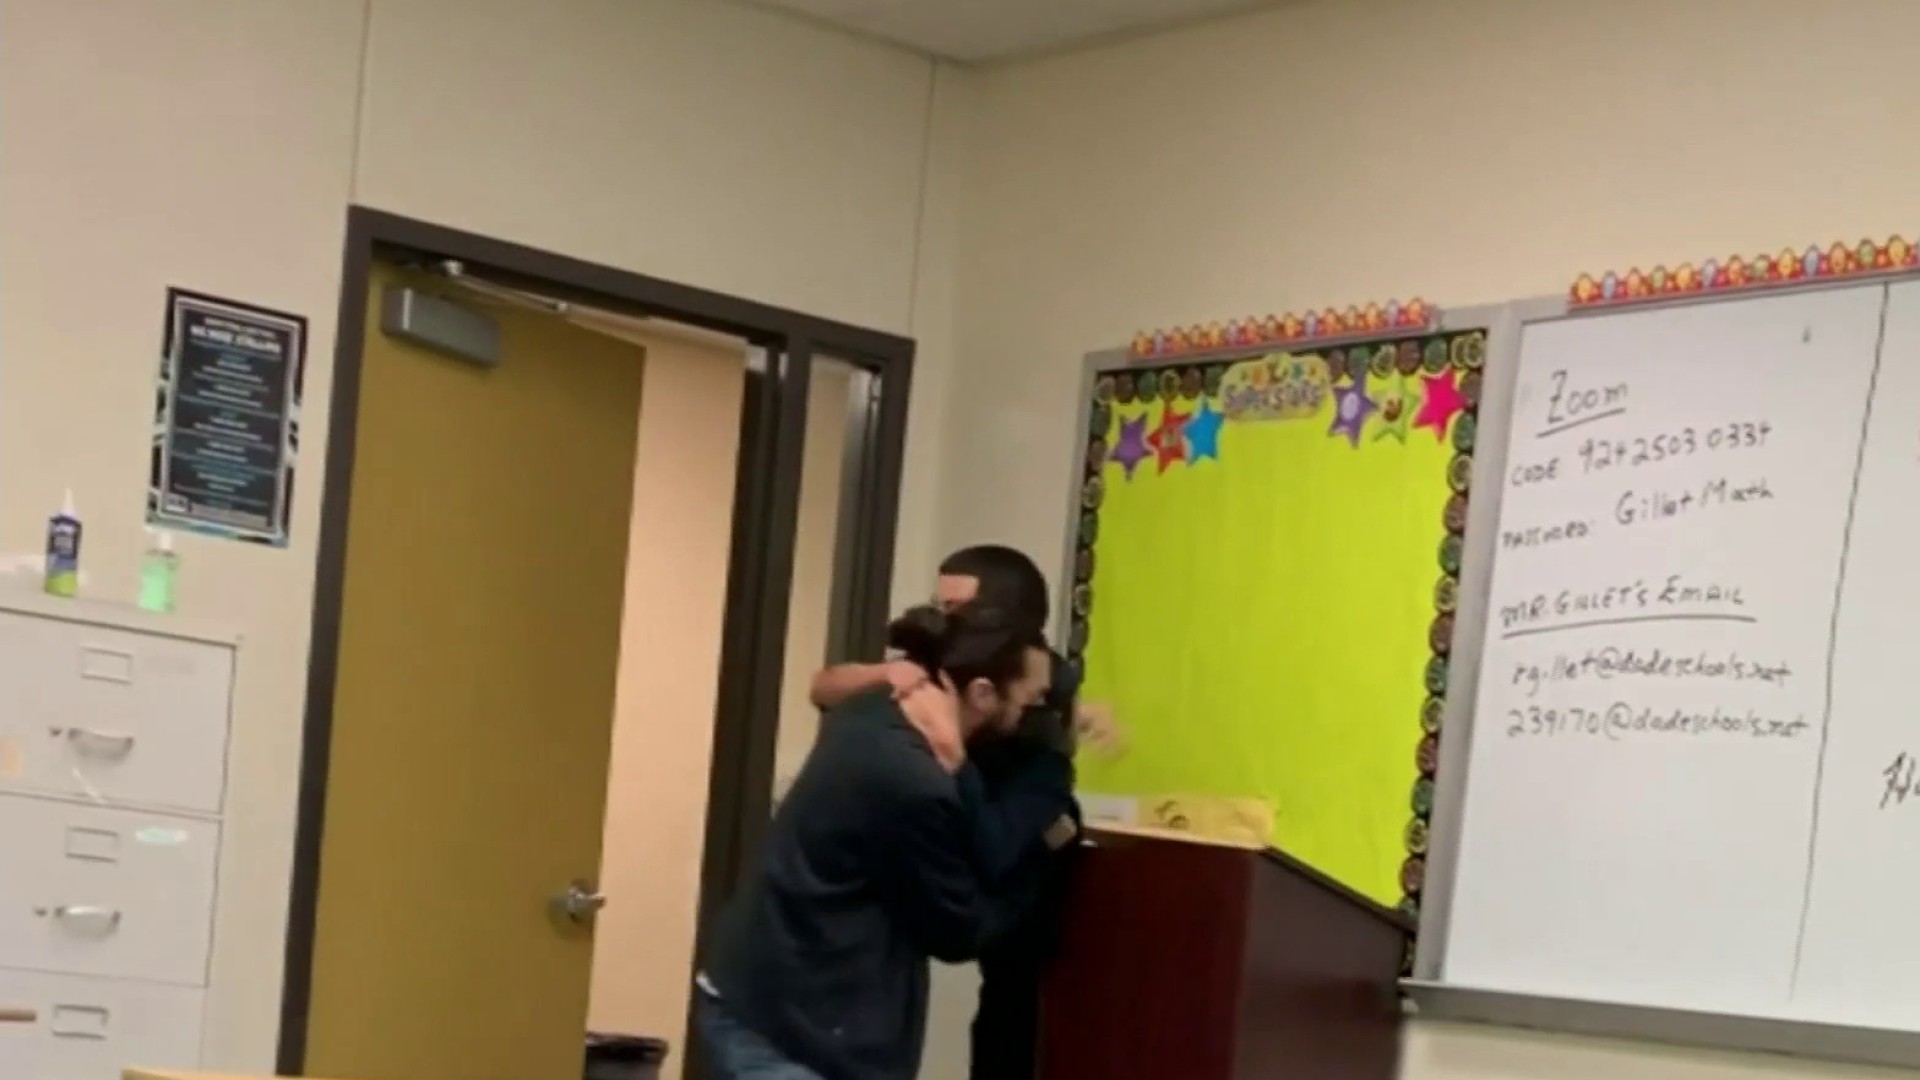 Taechersex - Video shows Florida teacher slamming student in dispute over bathroom break